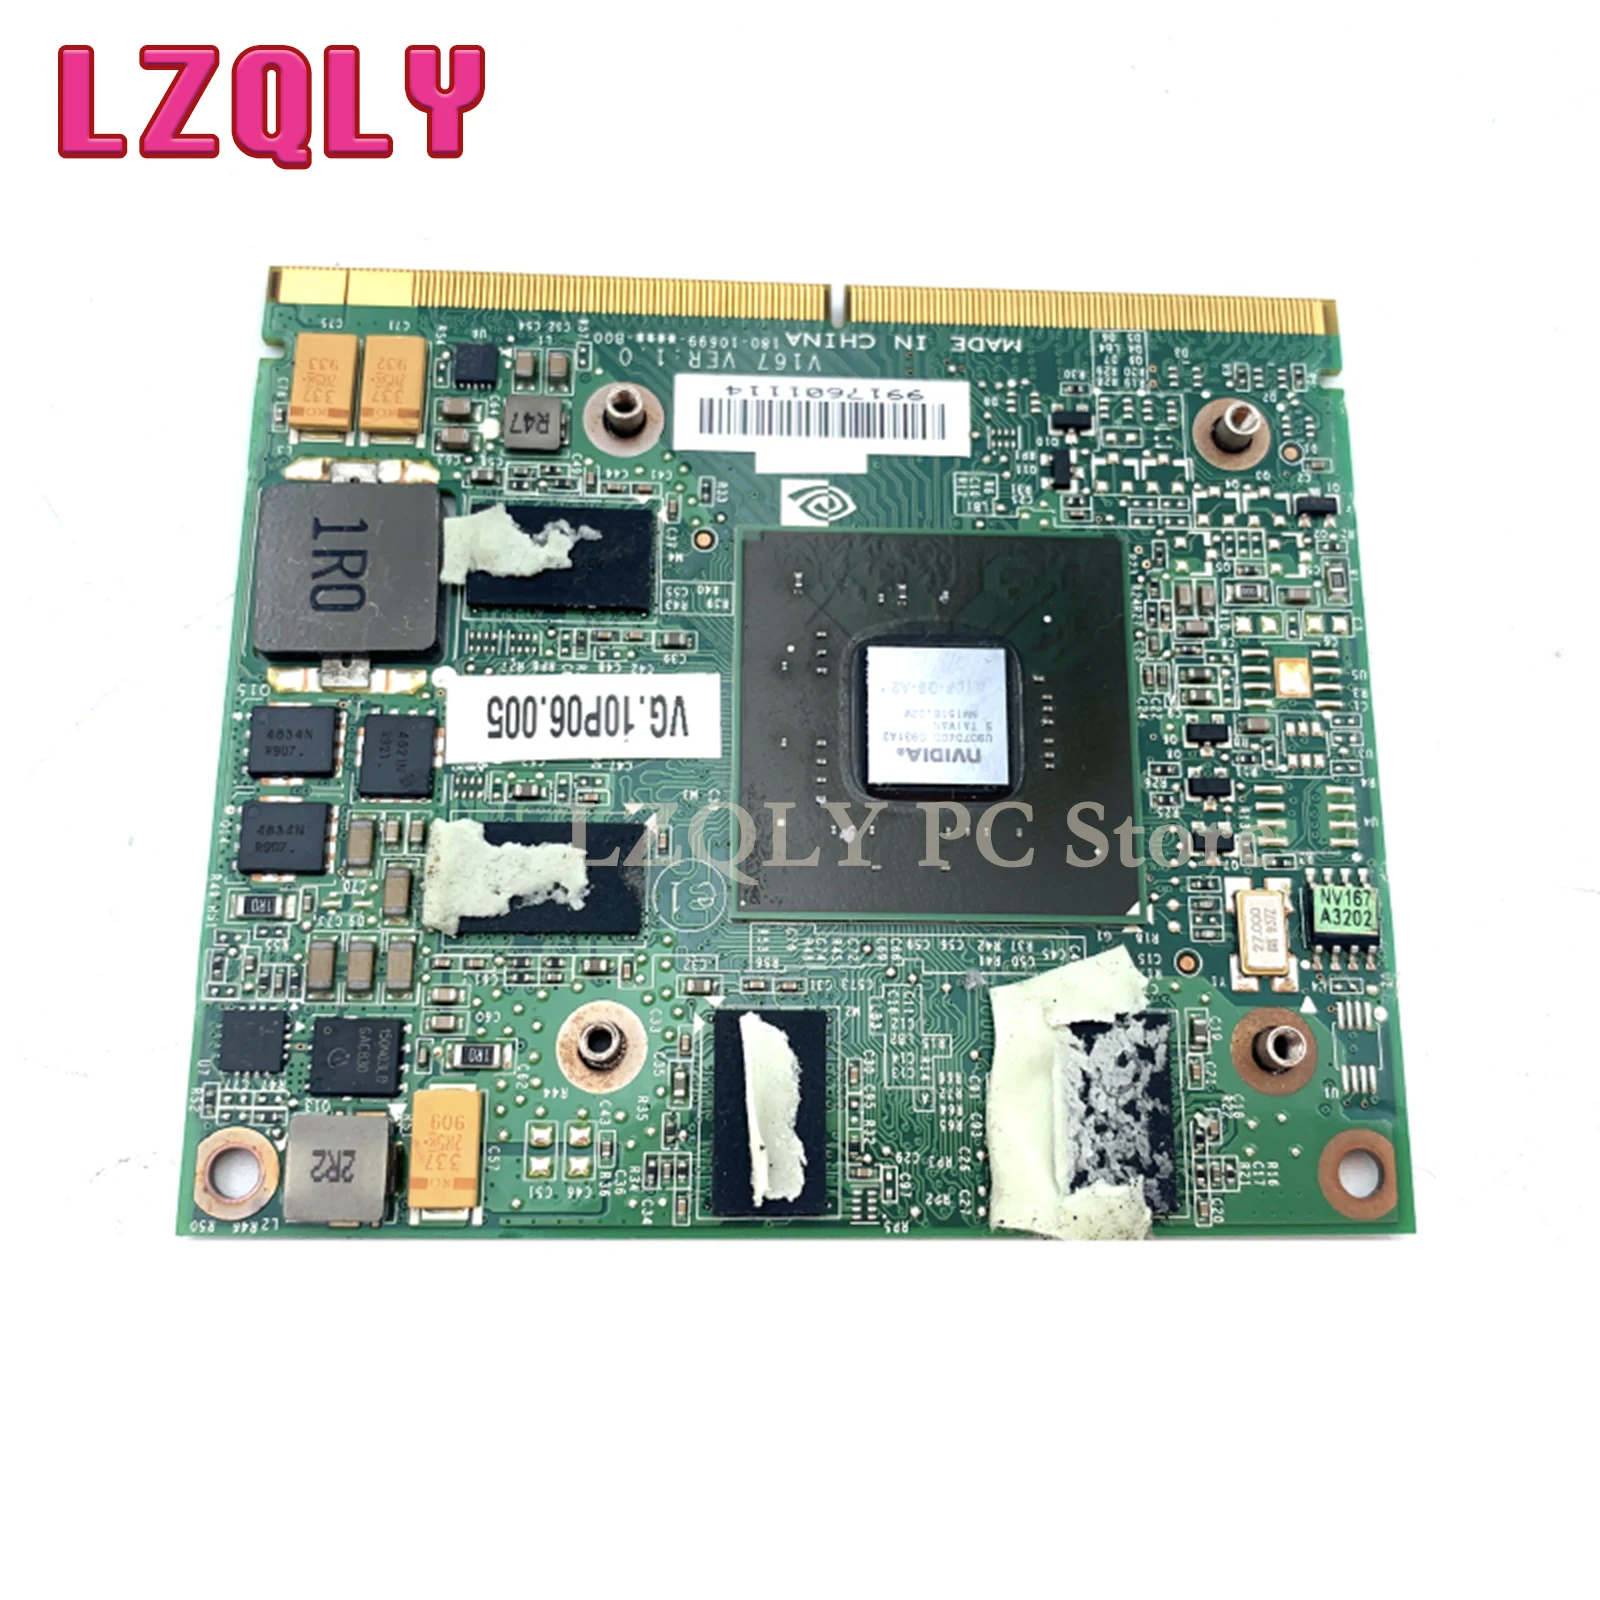 

LZQLY VG.10P06.005 VG.10P06.004 GT240M 1GB N10P-GS-A2 DDR3 For Acer Aspire 5739G 5935G 7738G 8735G 8940G Graphics Video Card